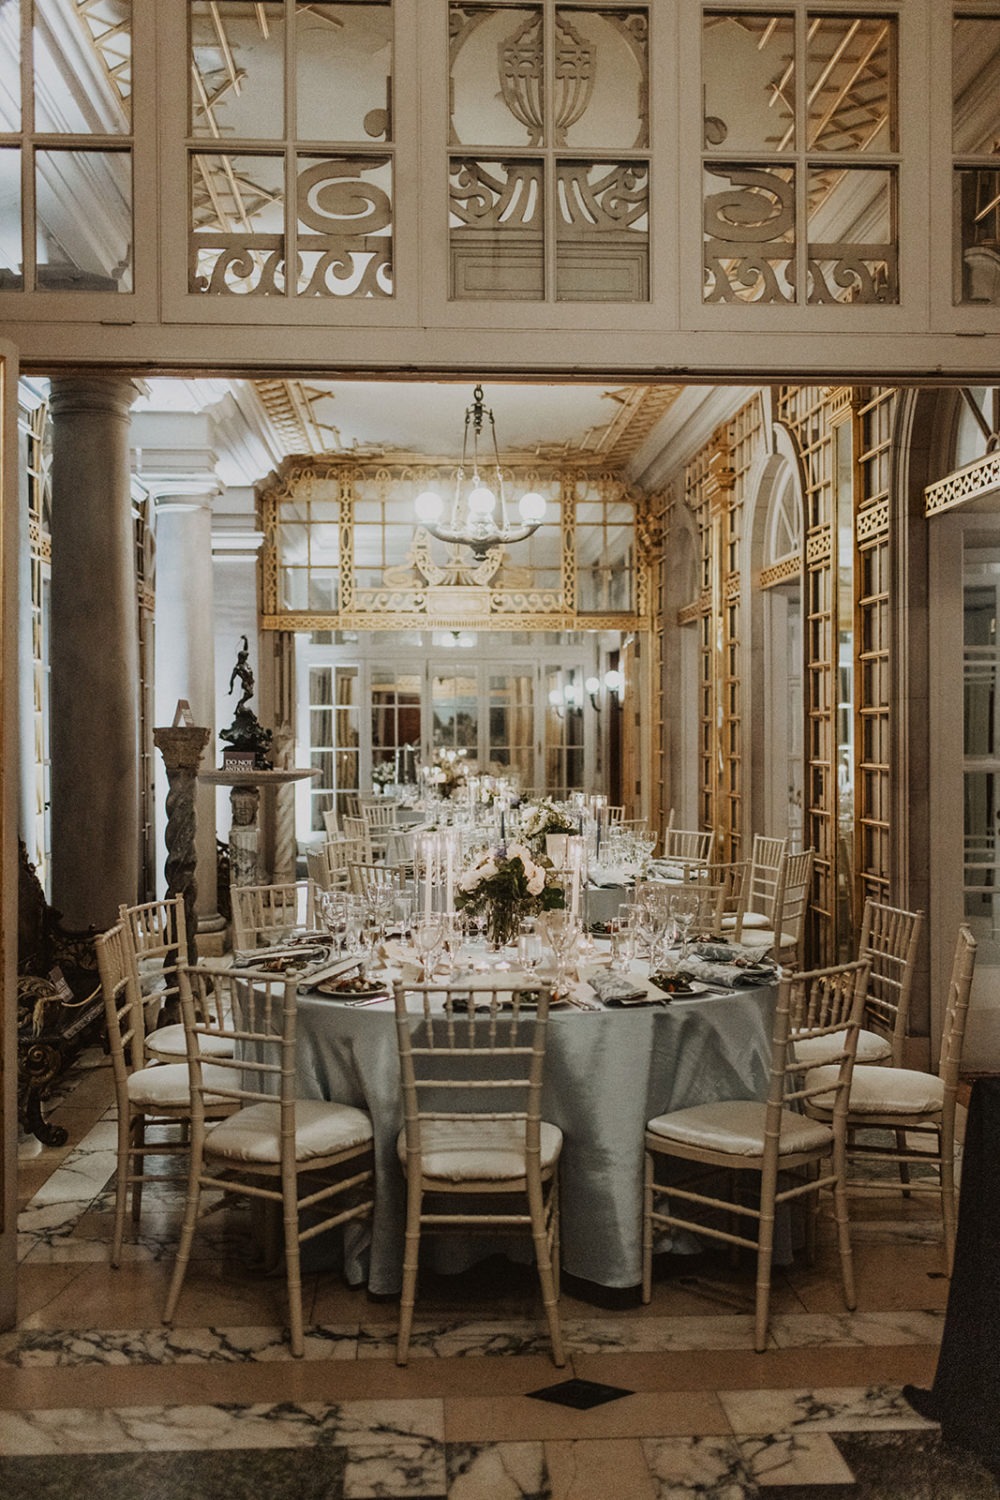 grand ballroom with reception decor at mansion wedding venue